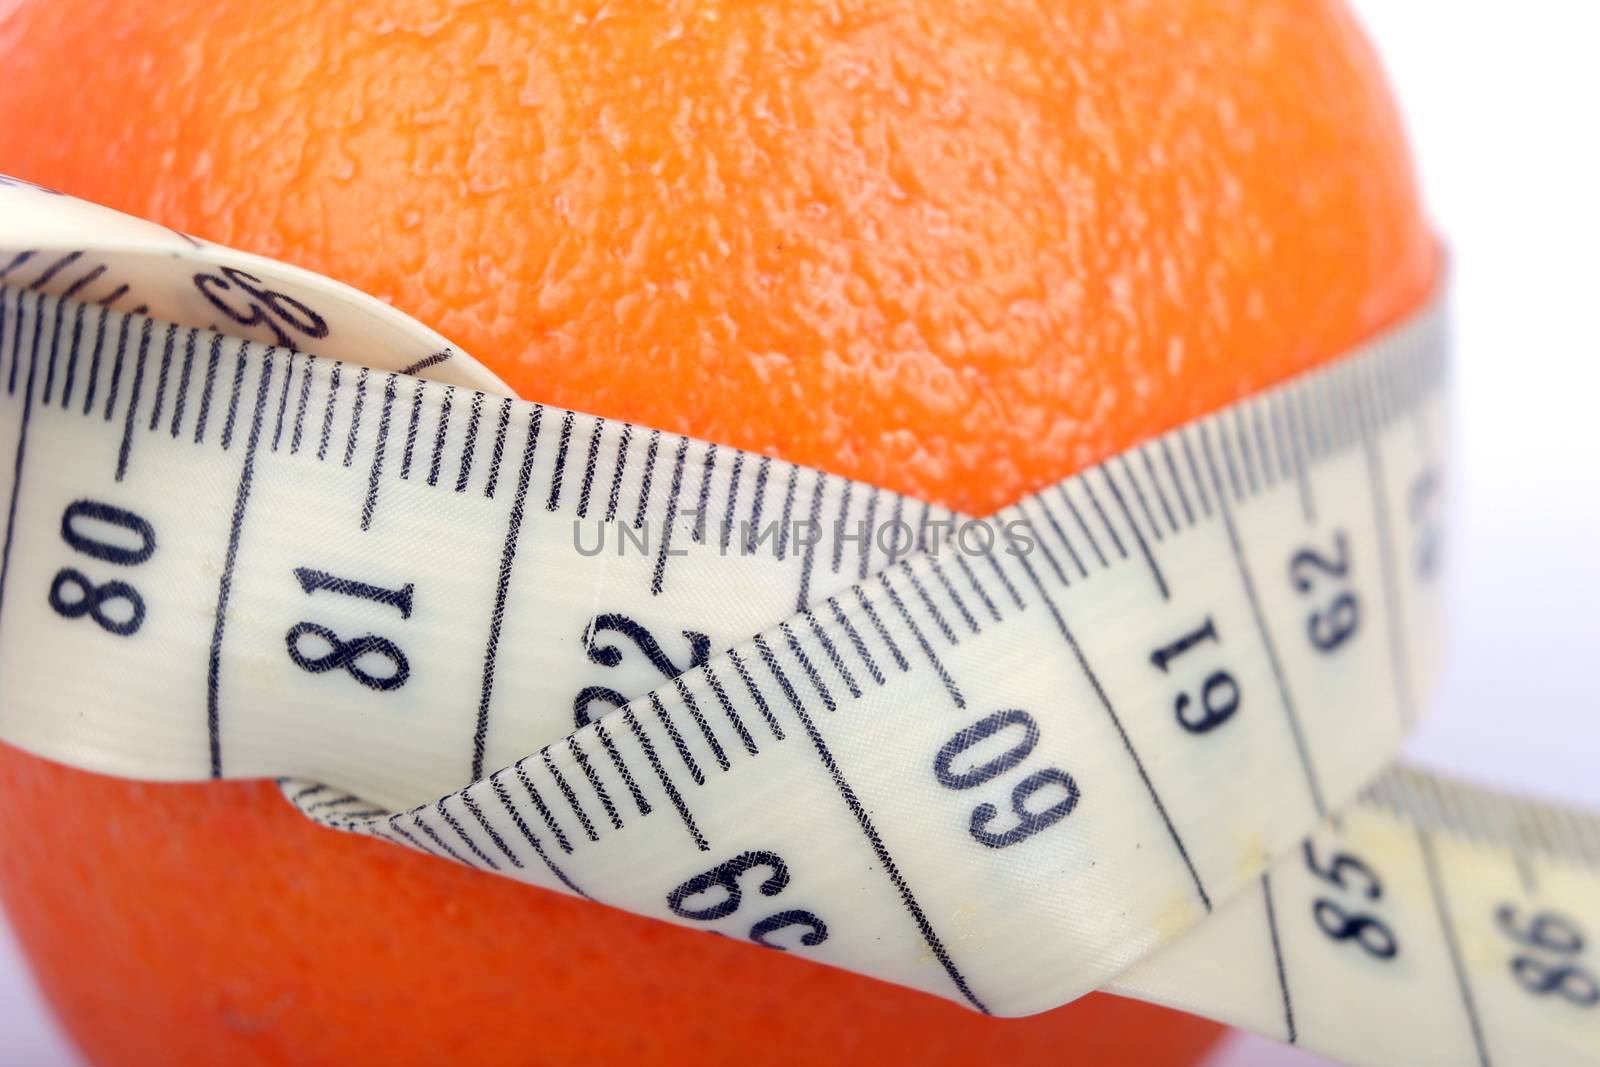 Orange with tape measure by robert_przybysz